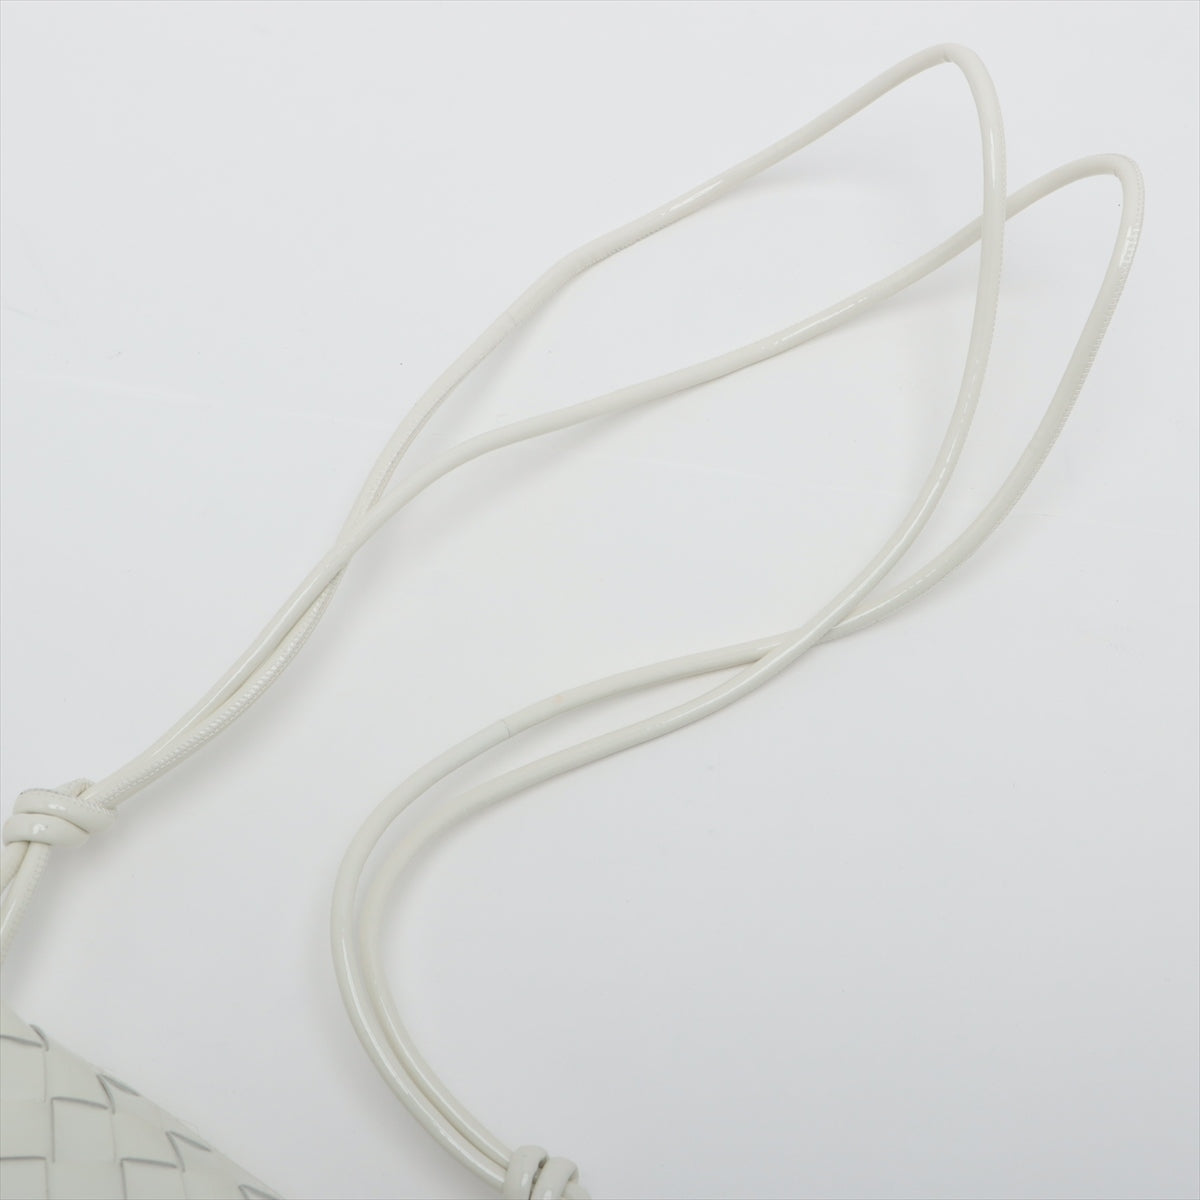 Bottega Veneta Intrecciato Patent leather Shoulder bag White